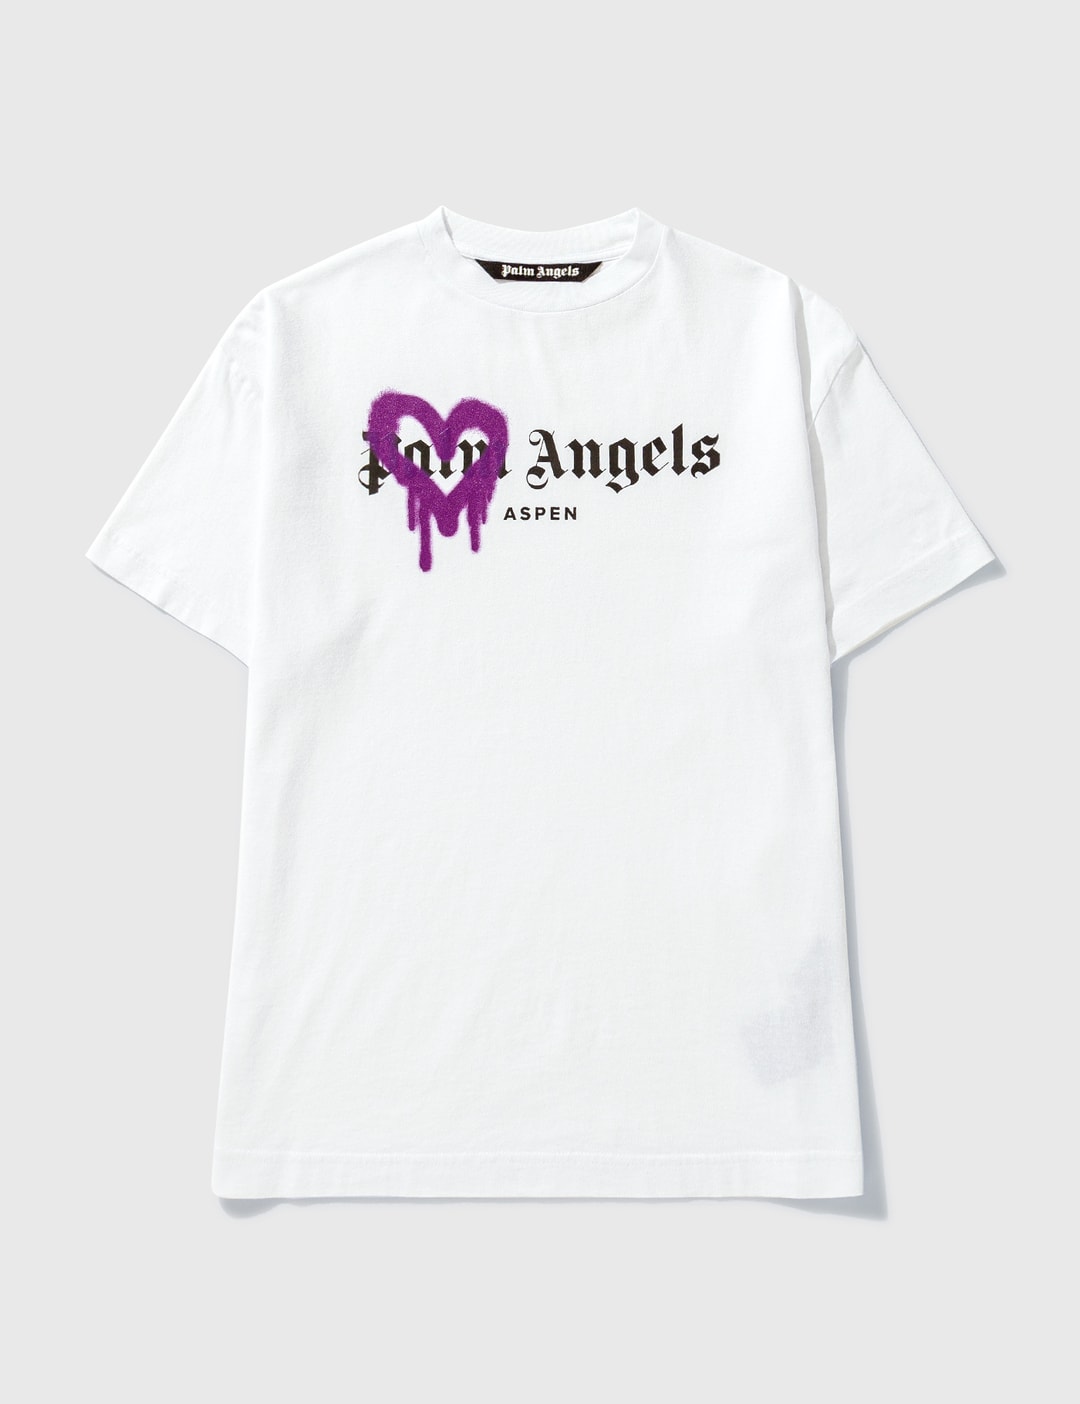 Palm Angels - Aspen Spray Logo T-shirt | HBX - Globally Curated Fashion ...